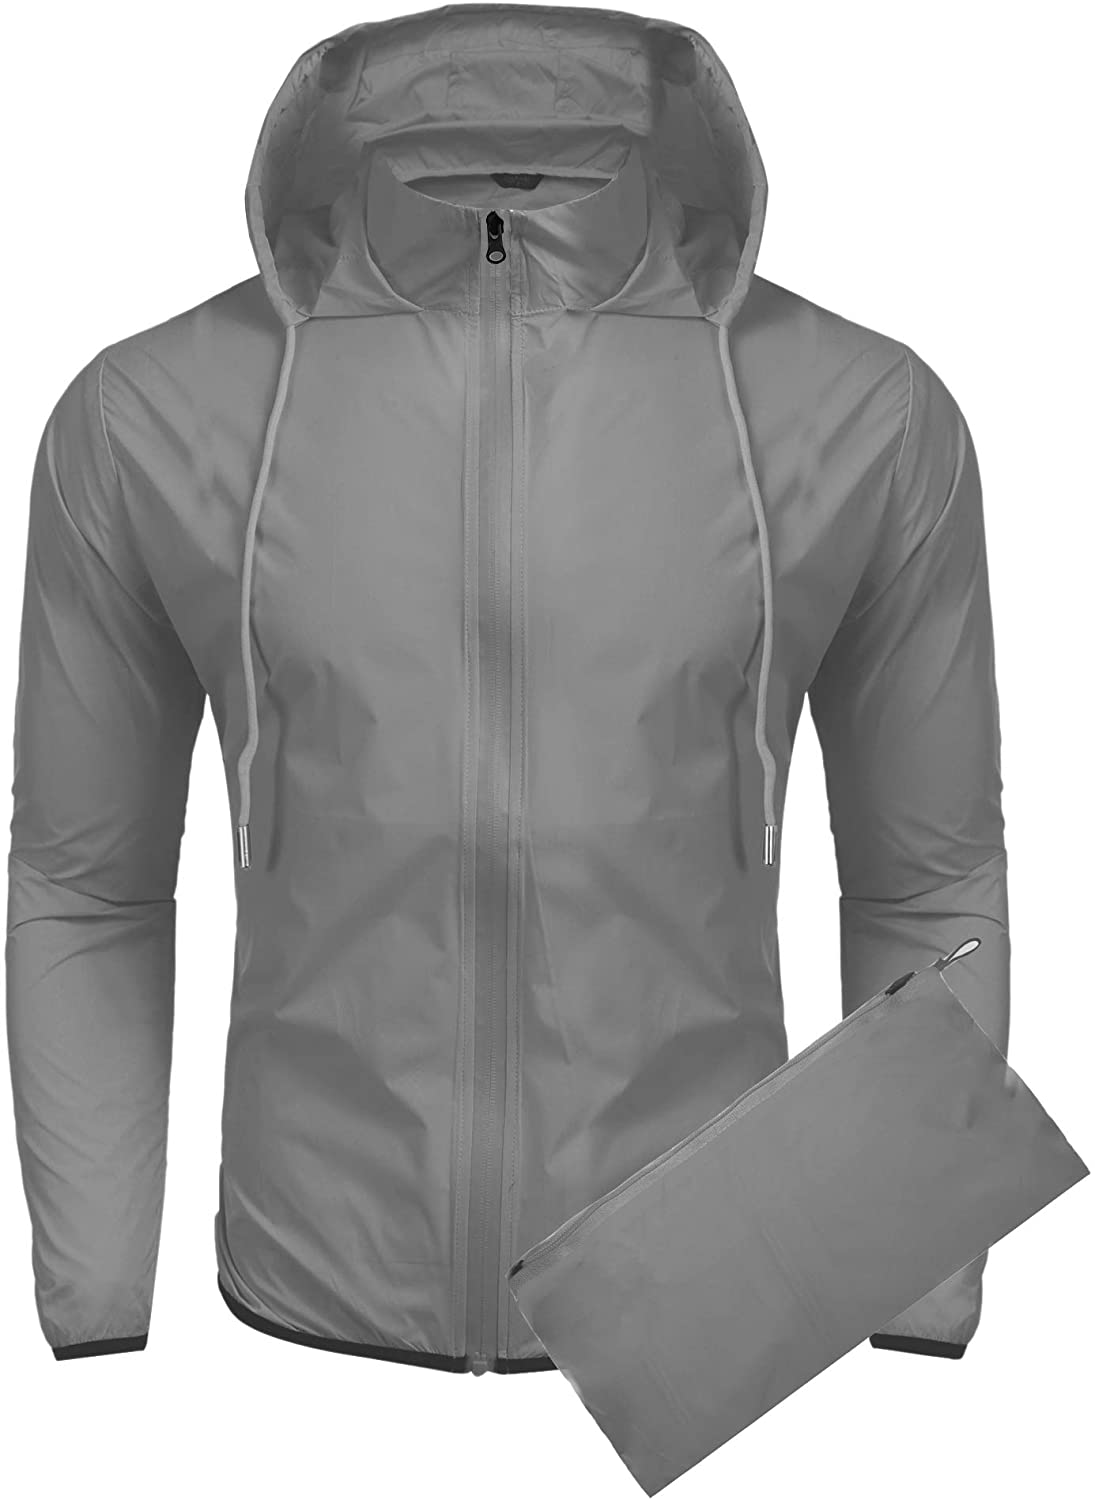 COOFANDY Unisex Waterproof Rain Poncho Lightweight Packable Hiking Hooded Raincoat Jacket for Outdoor Activities 